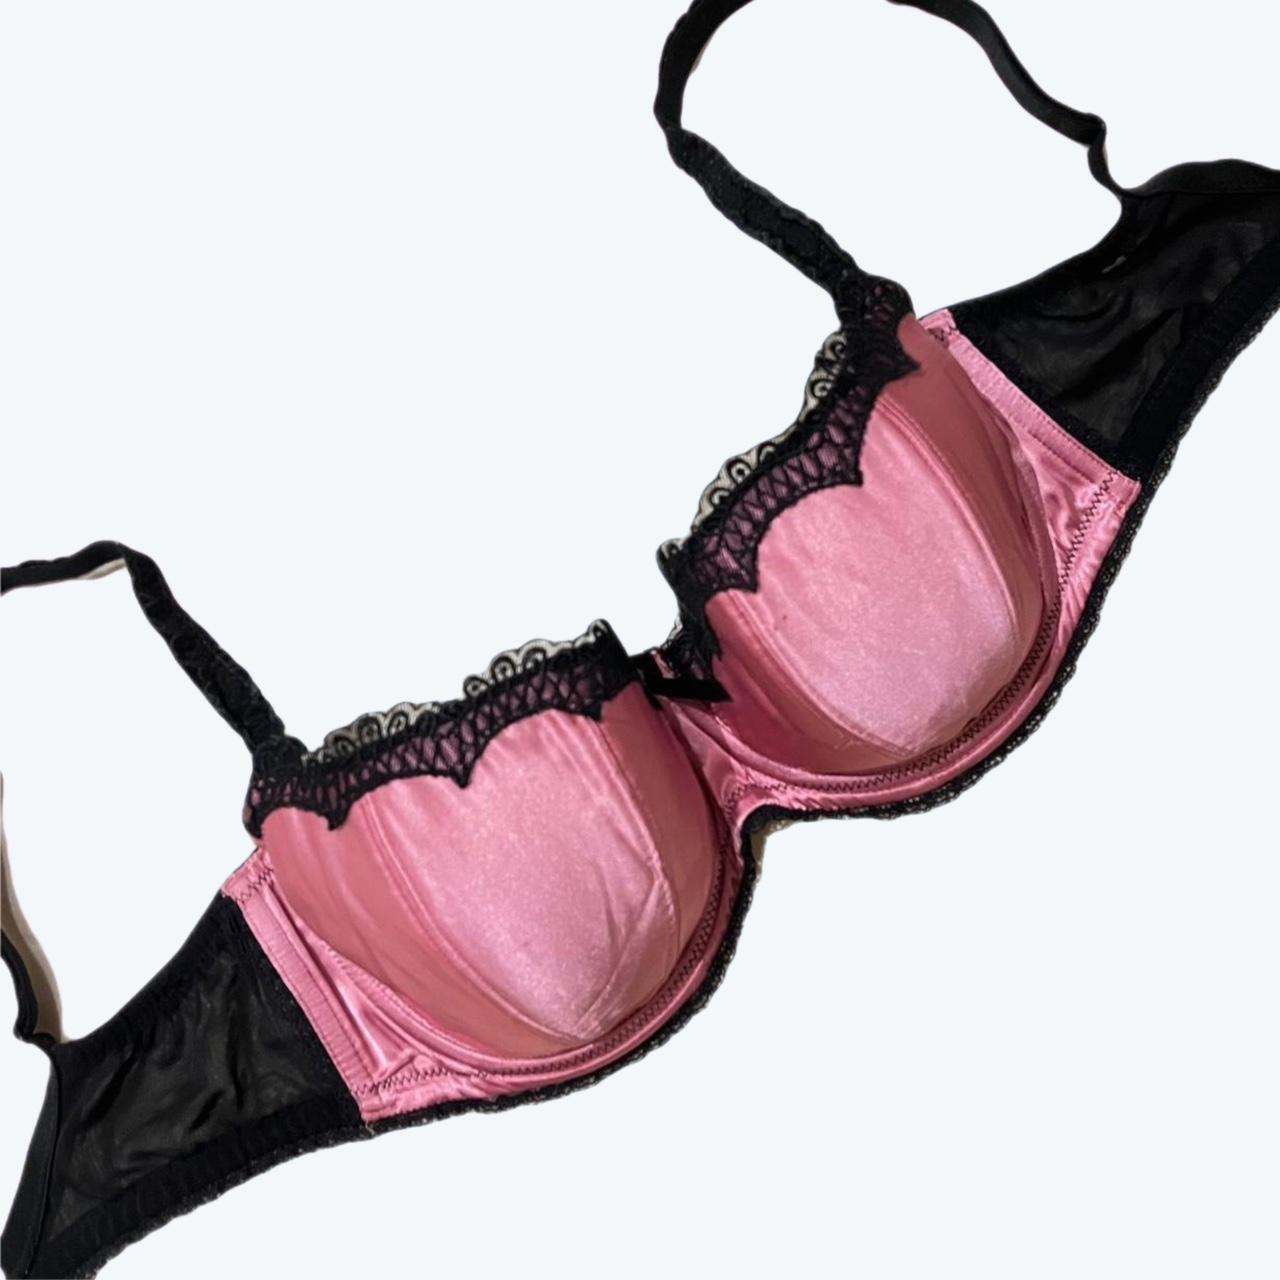 Black lace and pink satin bra. Has adjustable straps - Depop